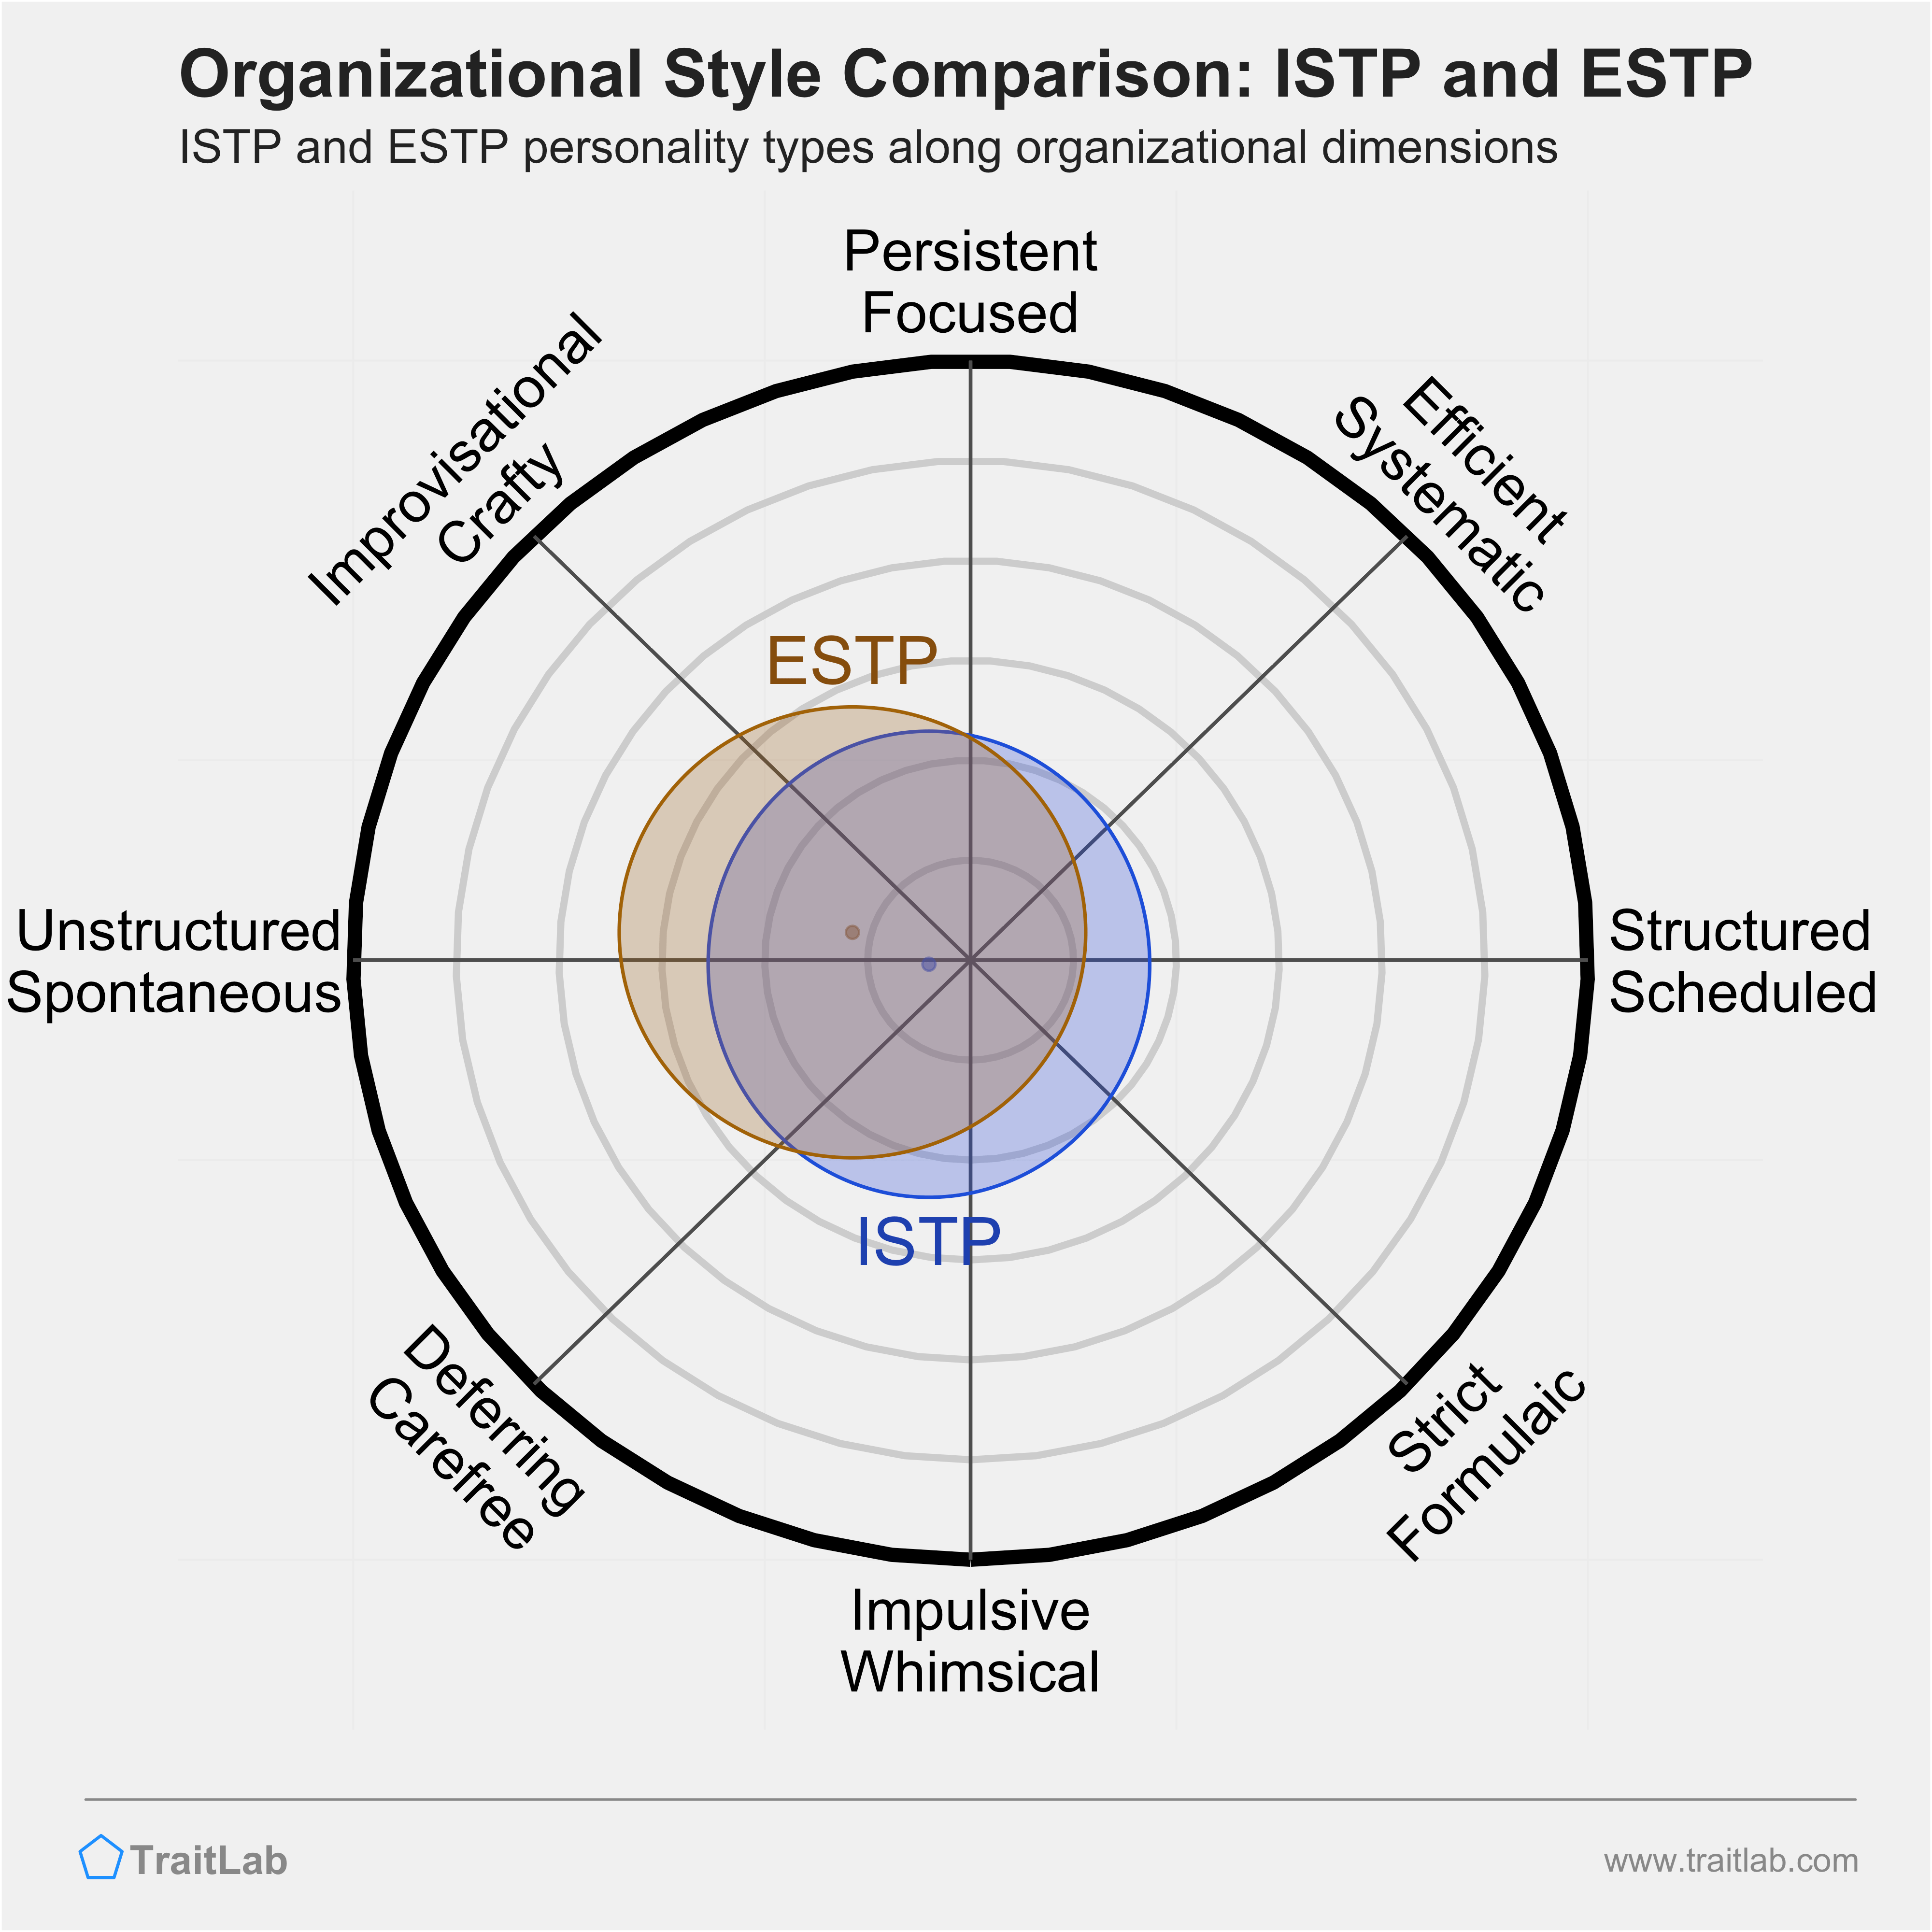 ISTP and ESTP comparison across organizational dimensions